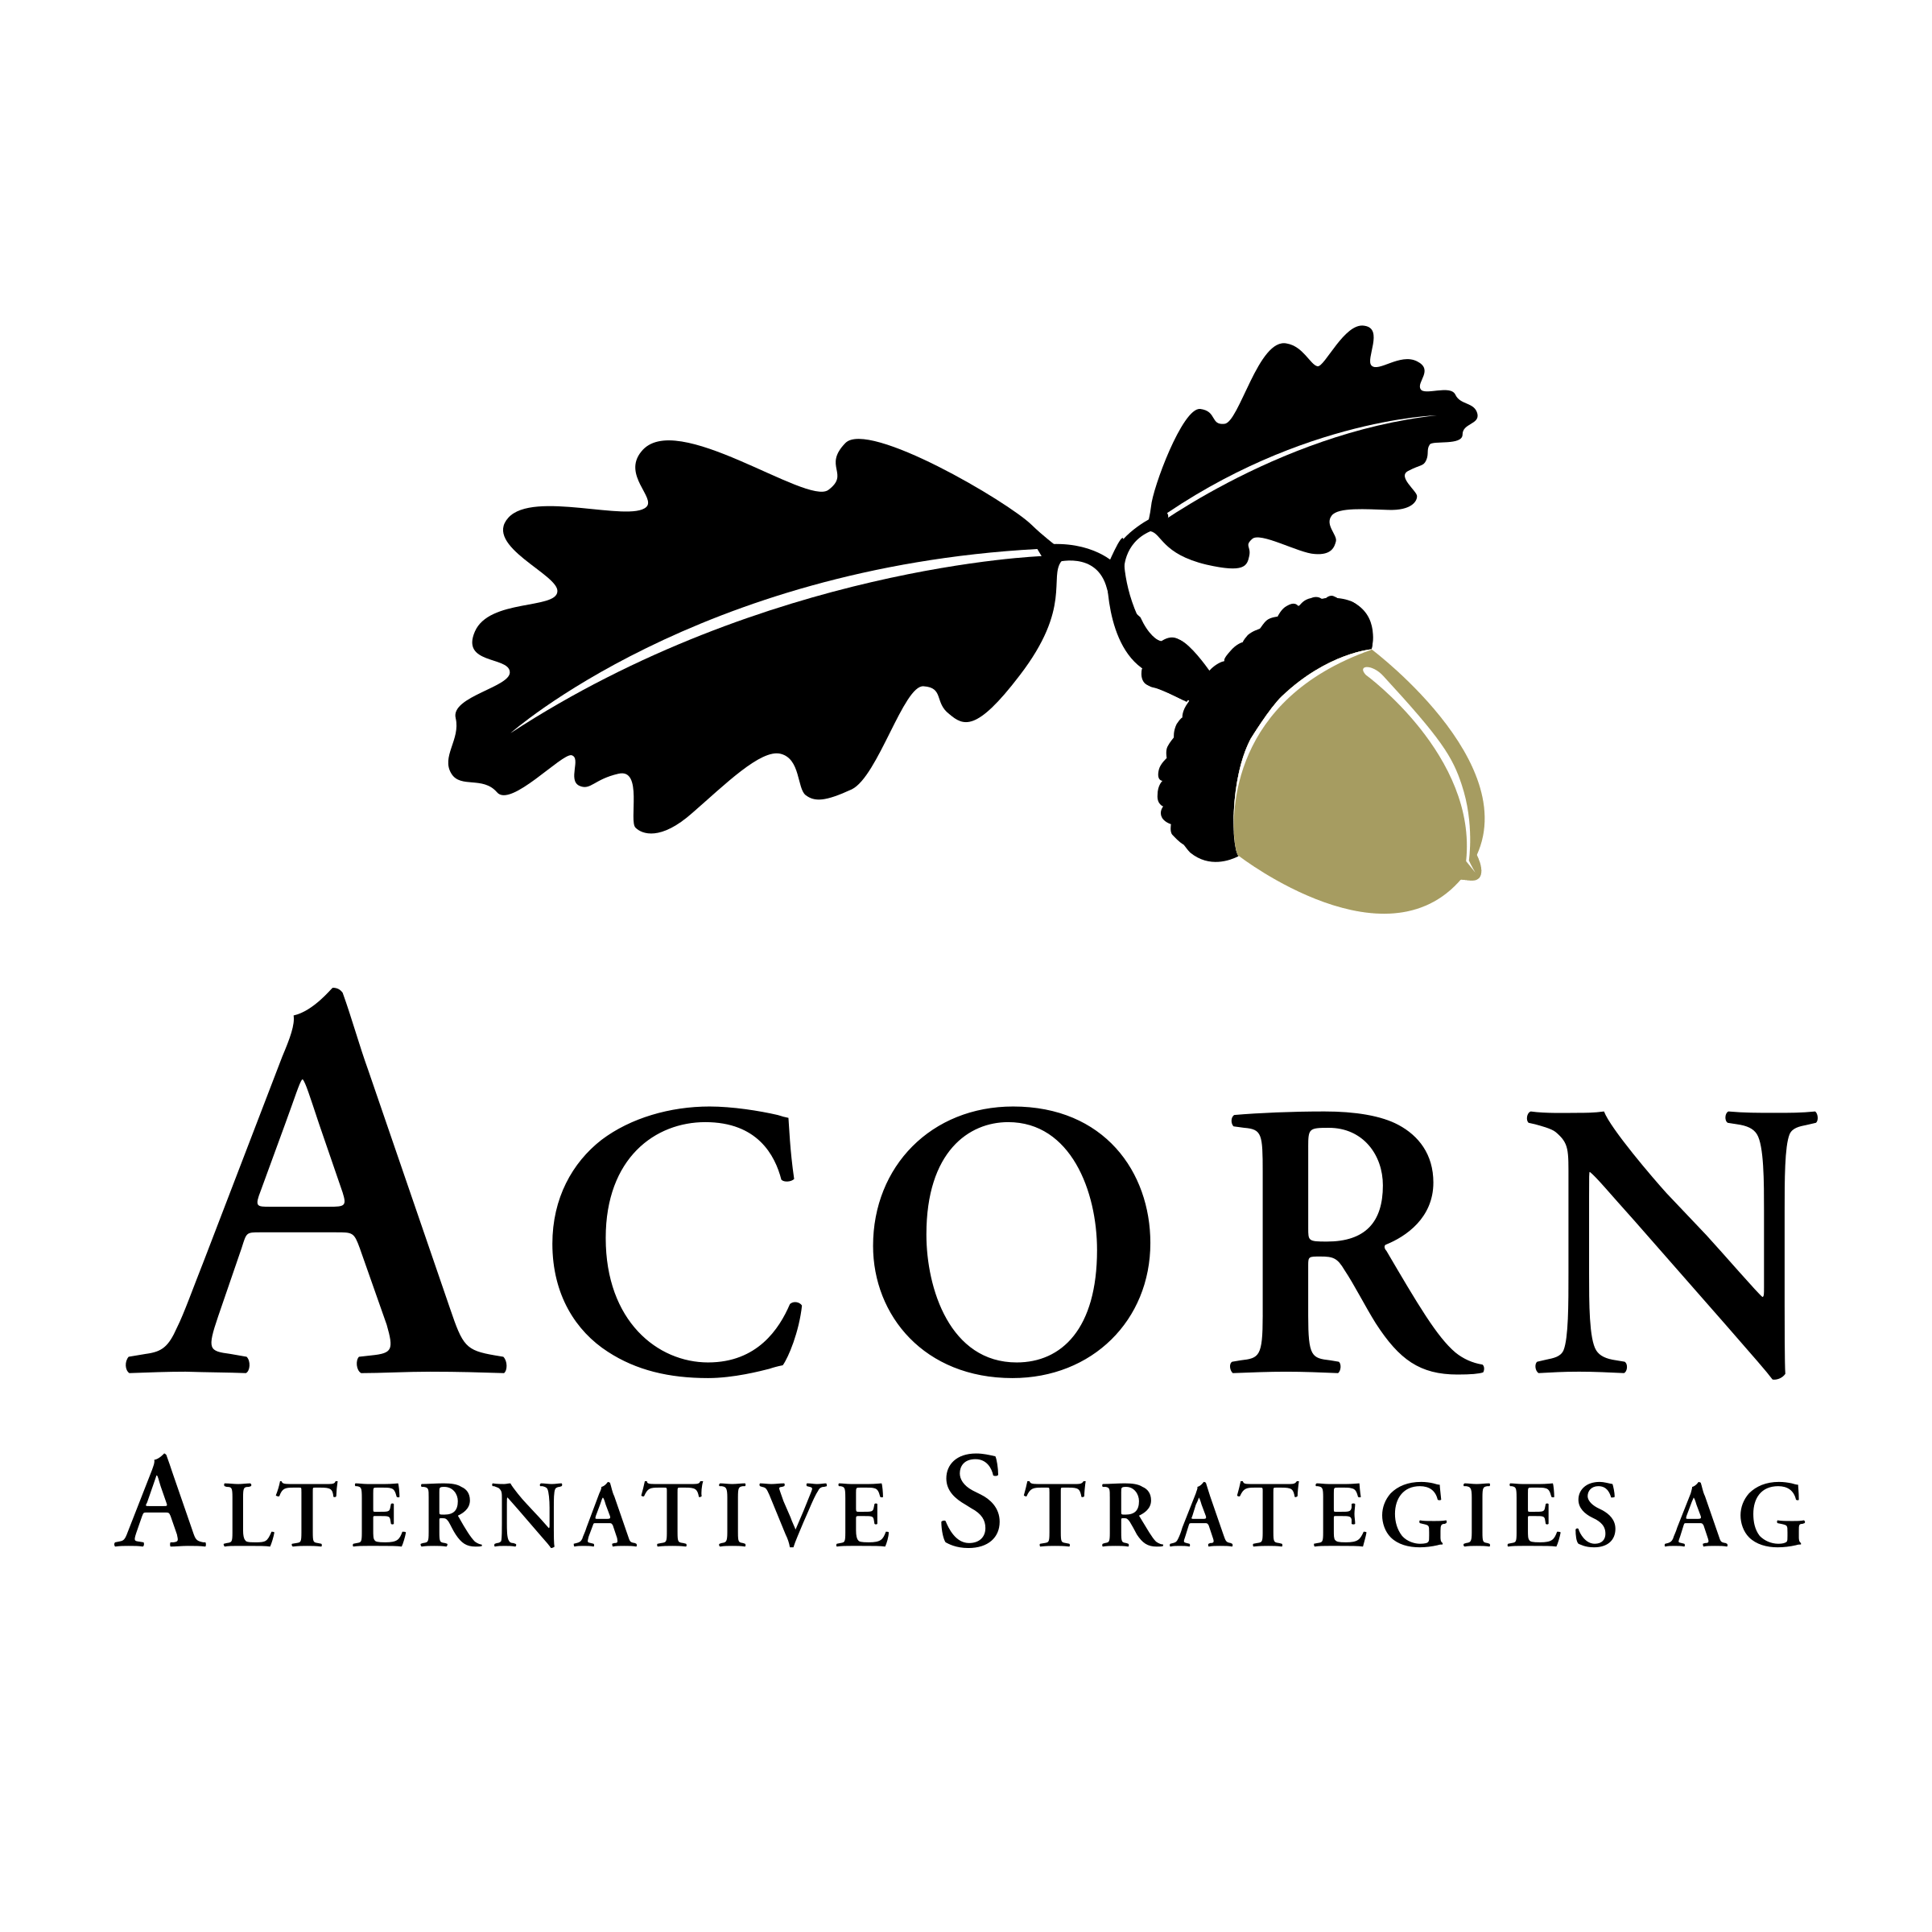 Acorn Logo - Acorn Logo PNG Transparent & SVG Vector - Freebie Supply